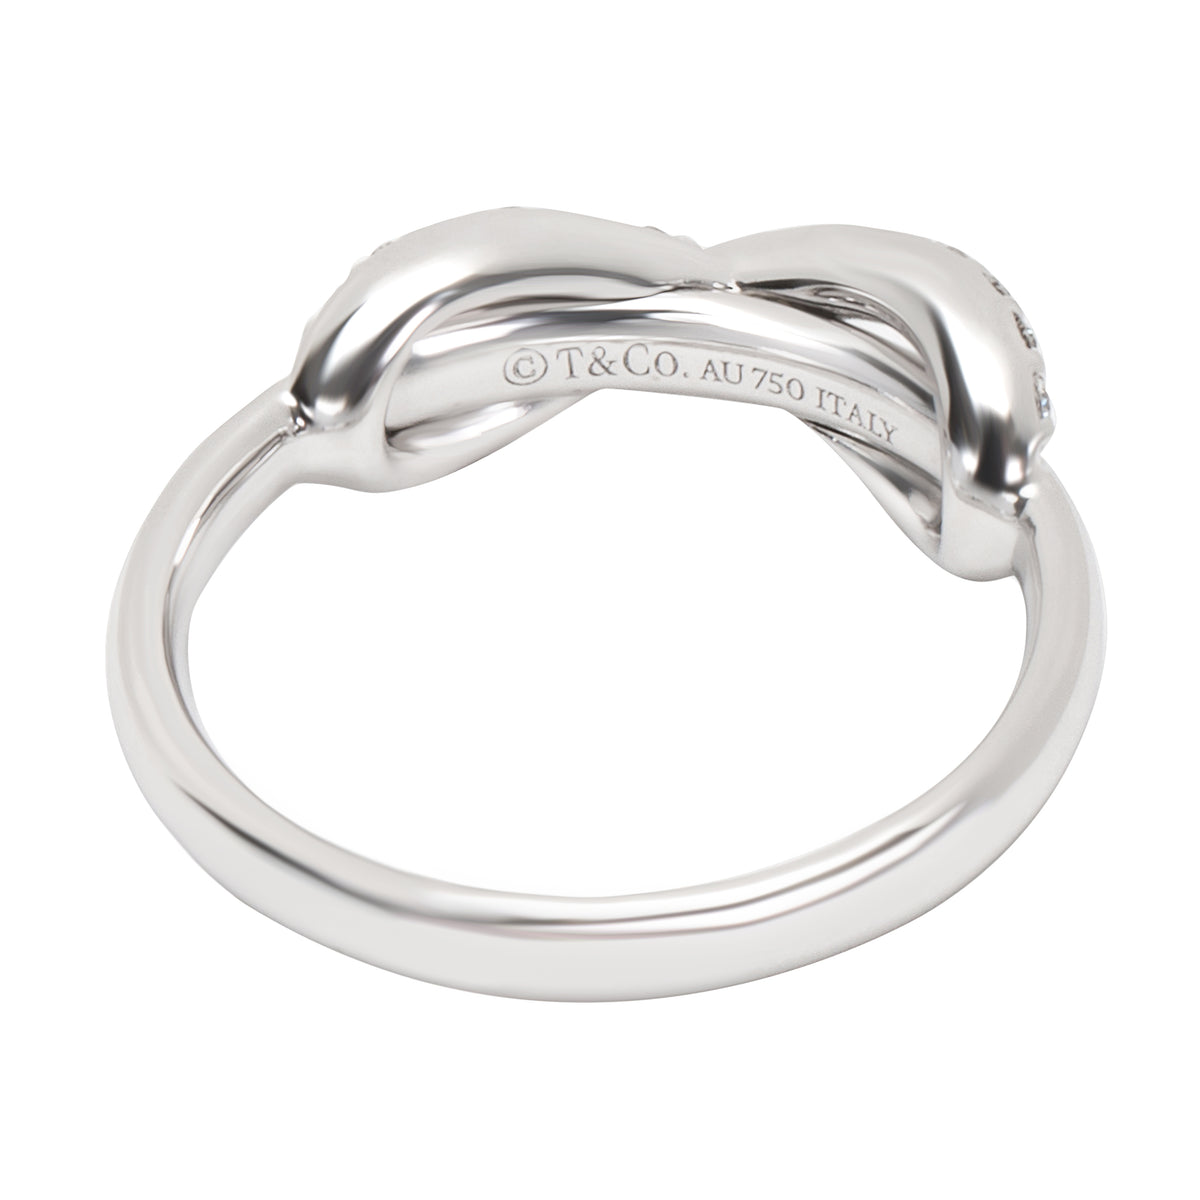 Tiffany & Co. Diamond Infinity Ring in 18K White Gold 0.13 CTW